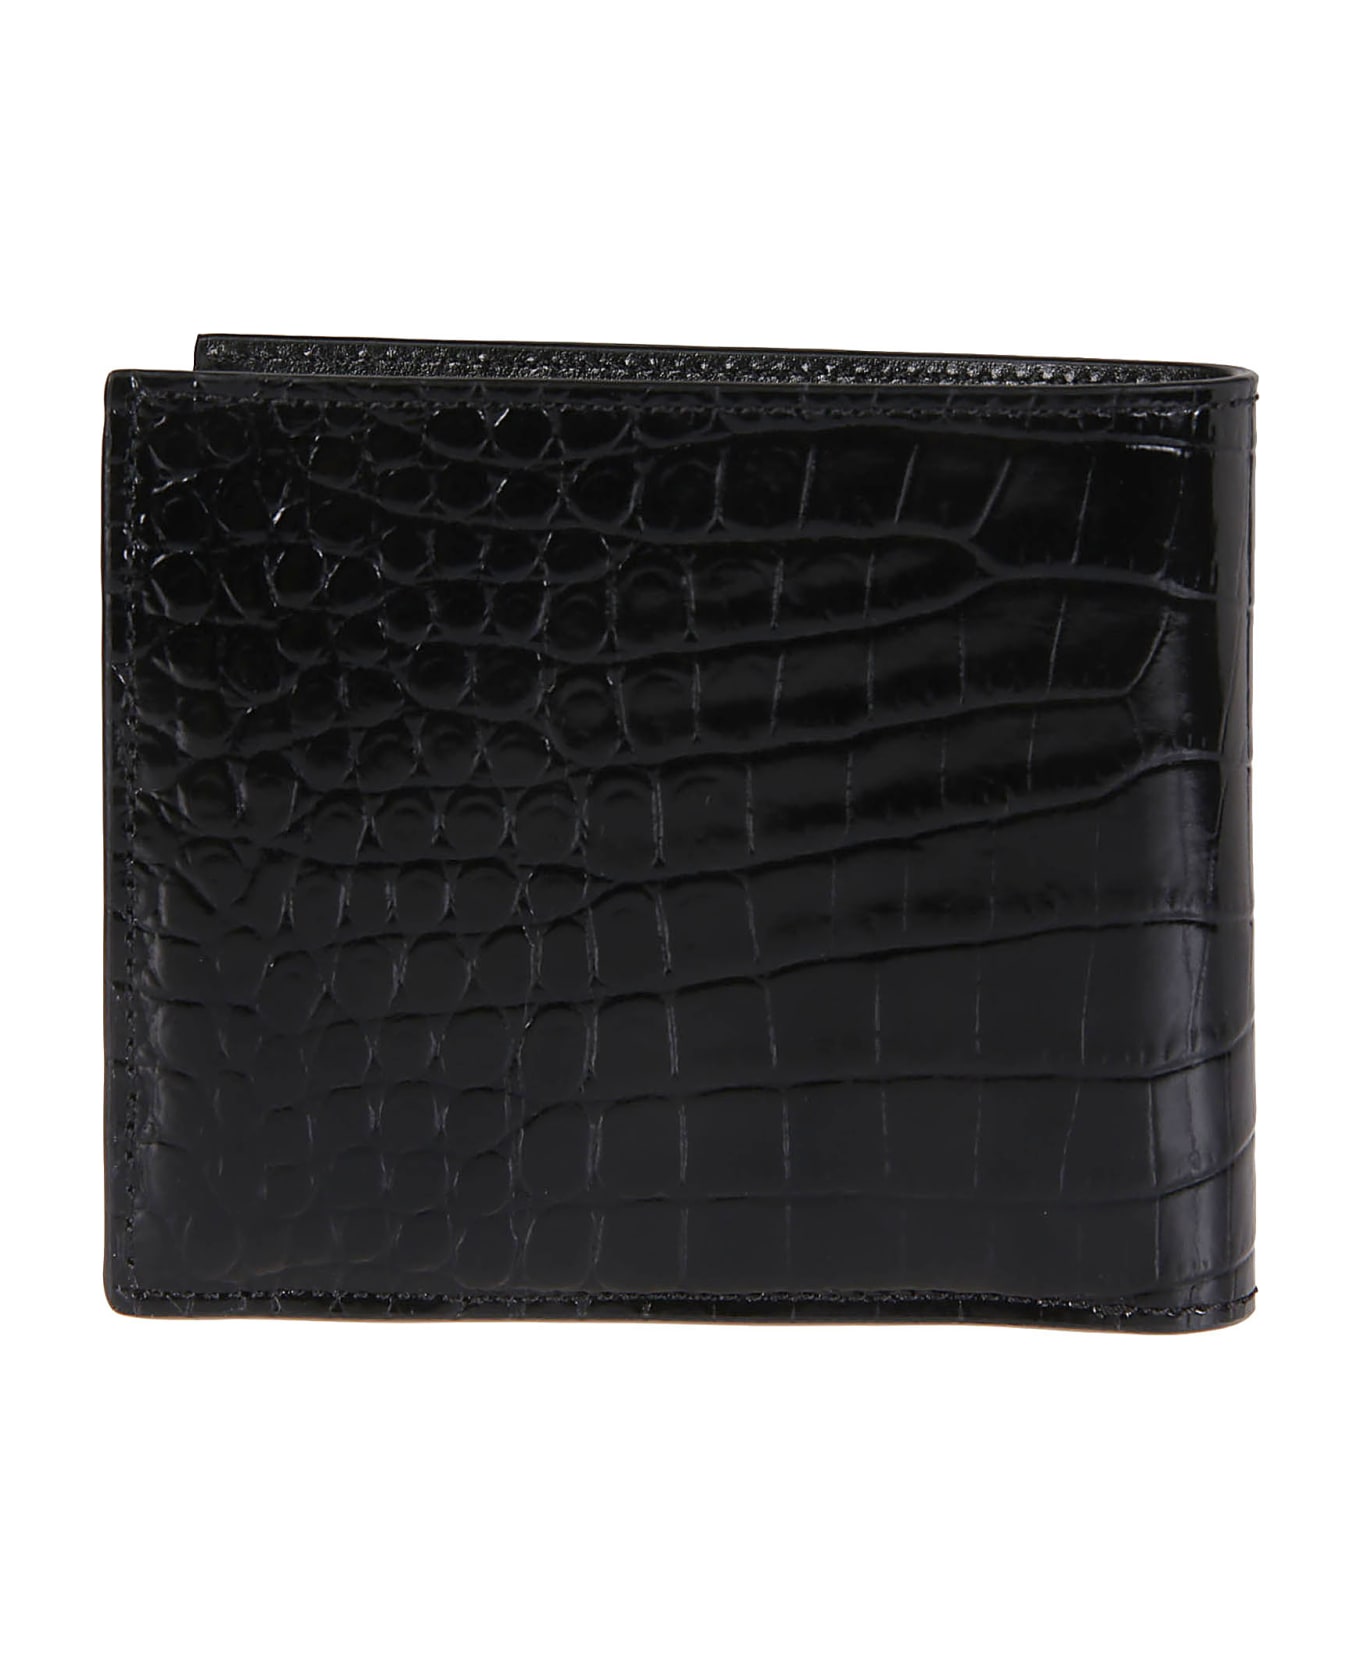 Tom Ford Printed Alligator Bifold Wallet - Black 財布